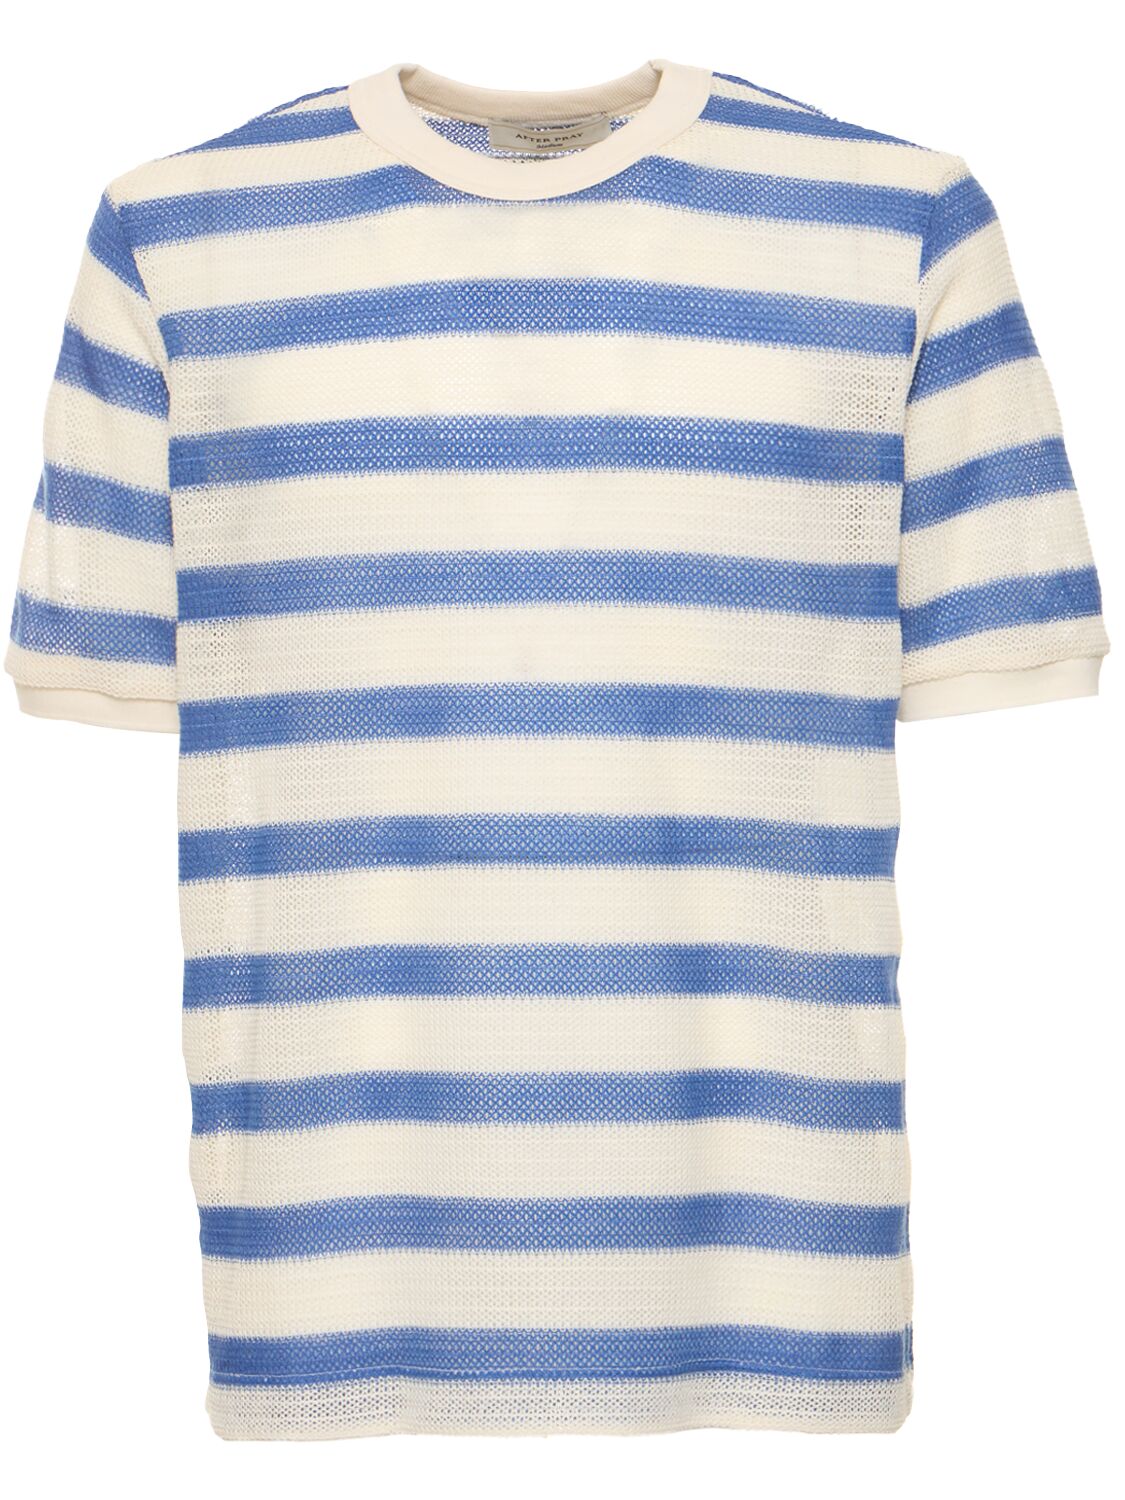 Image of Striped Mesh Knit T-shirt